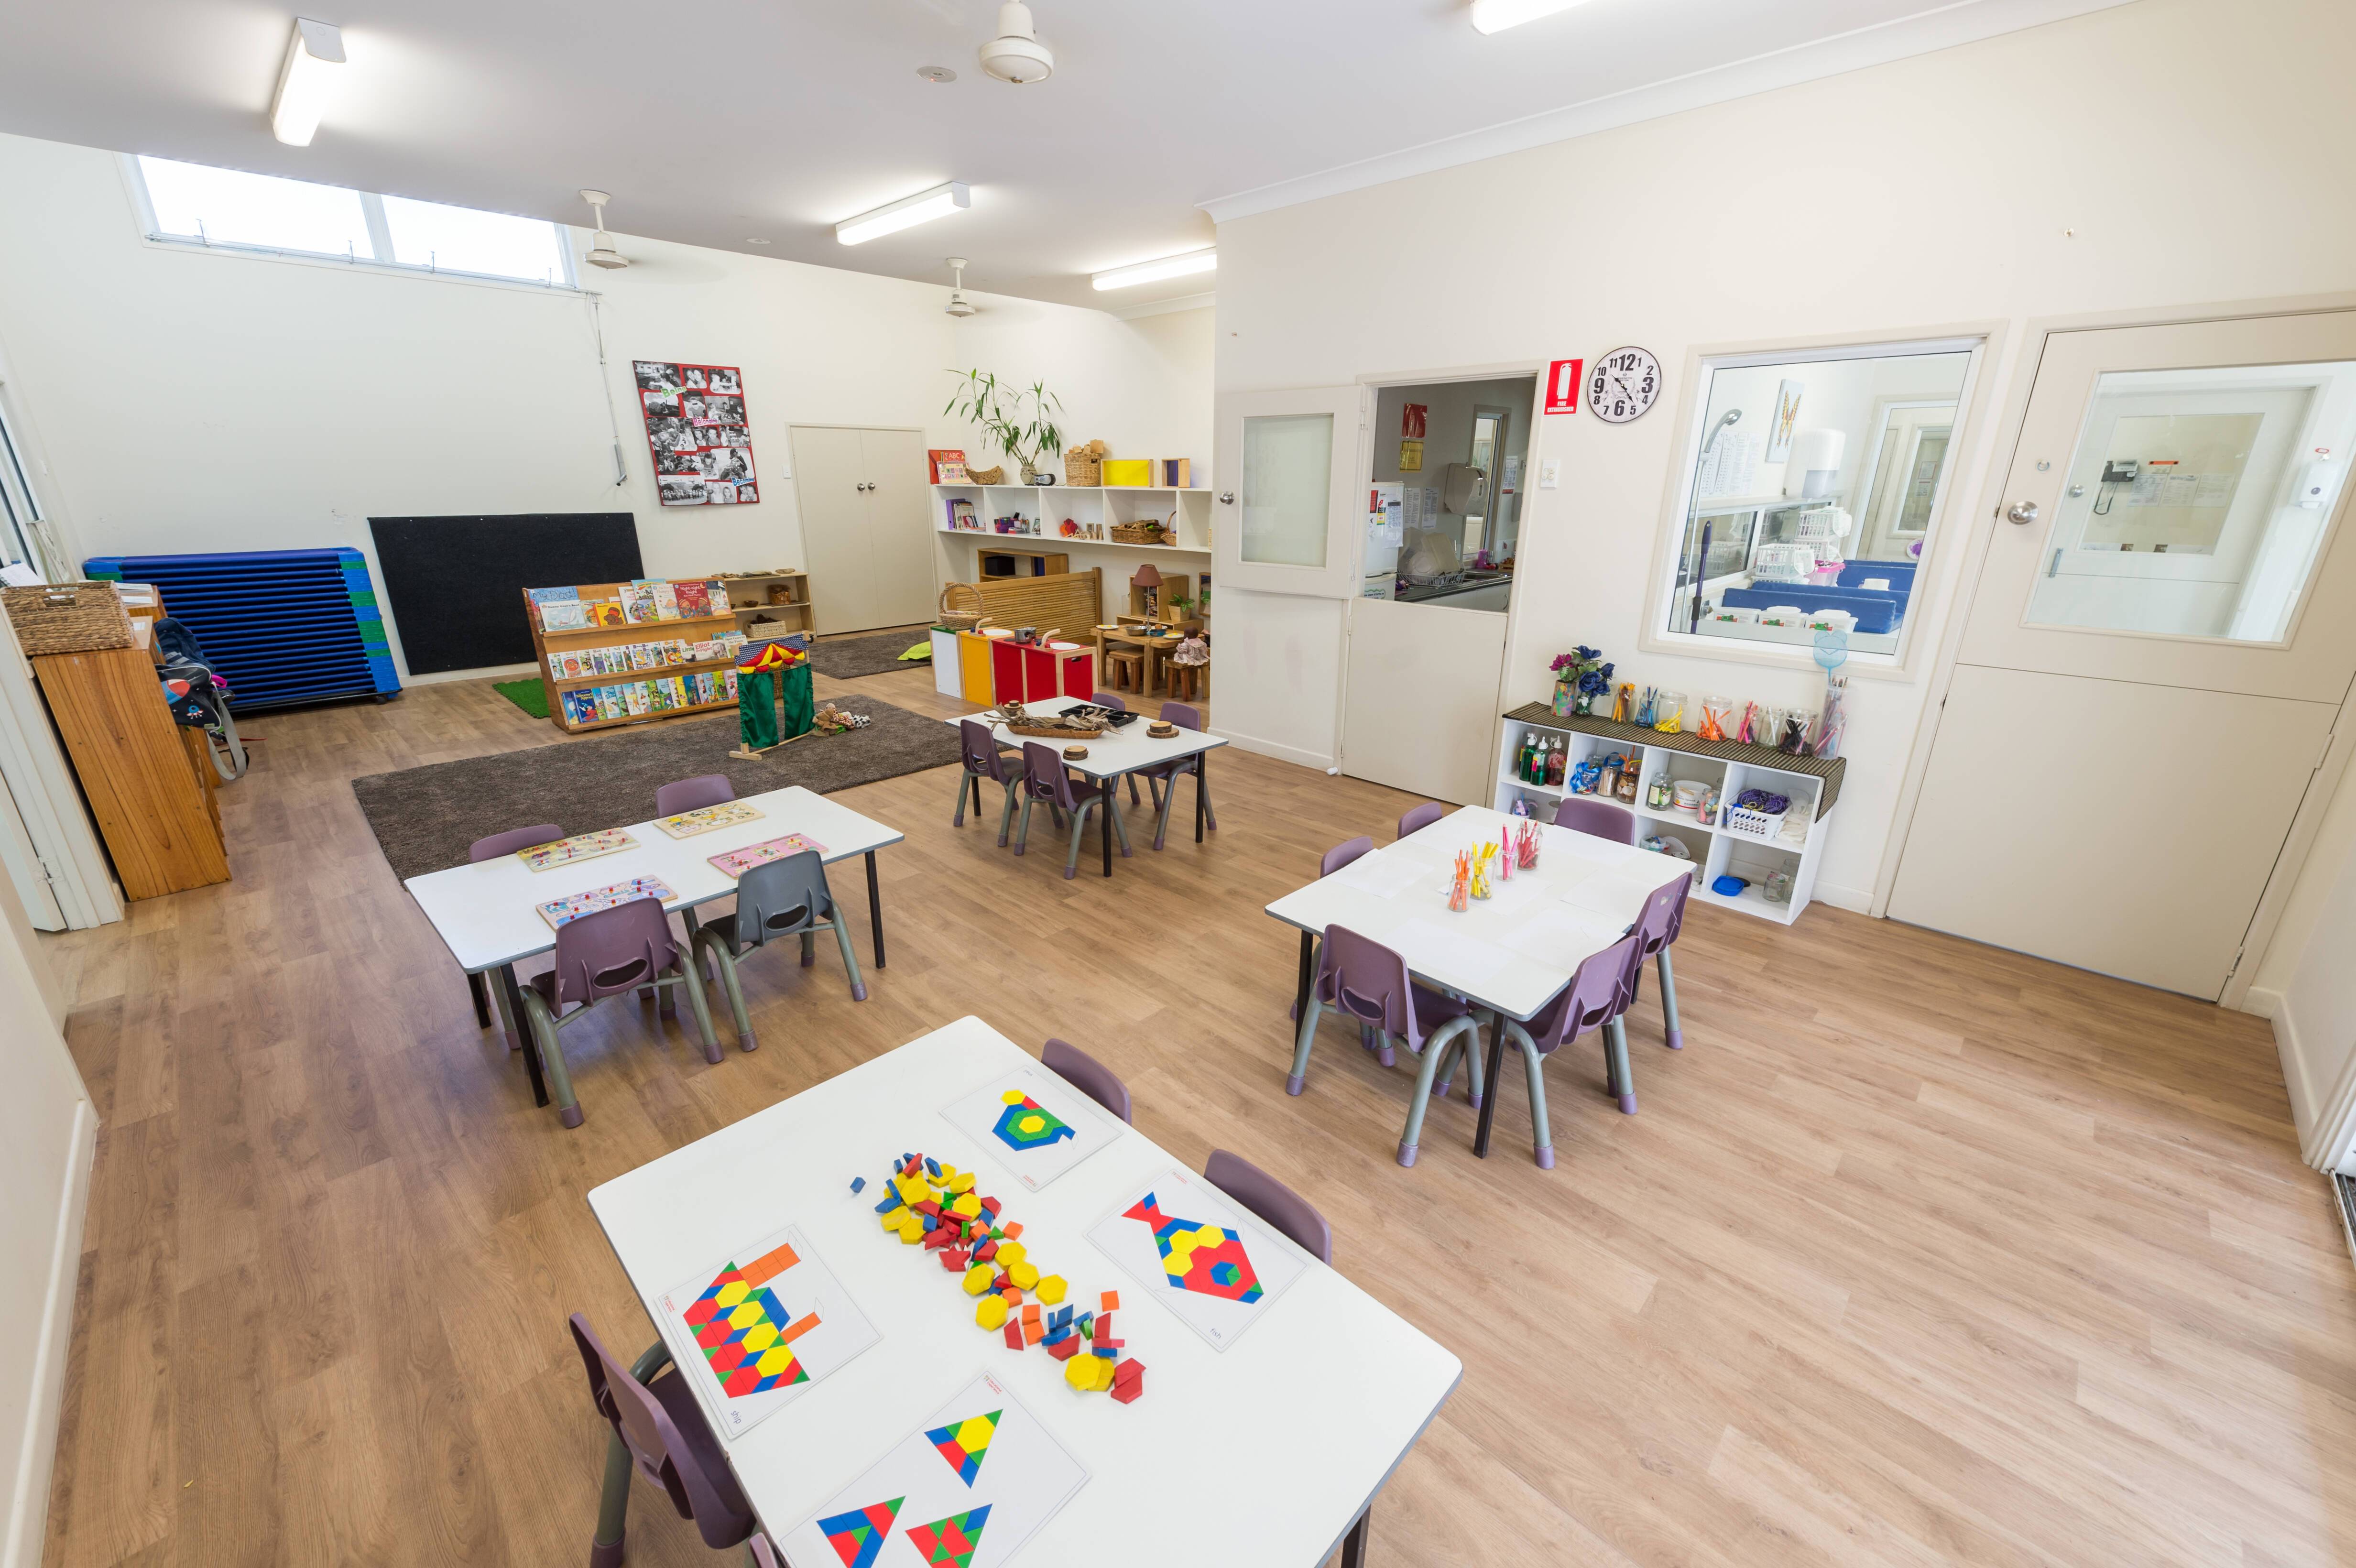 Guardian Childcare & Education Aspley